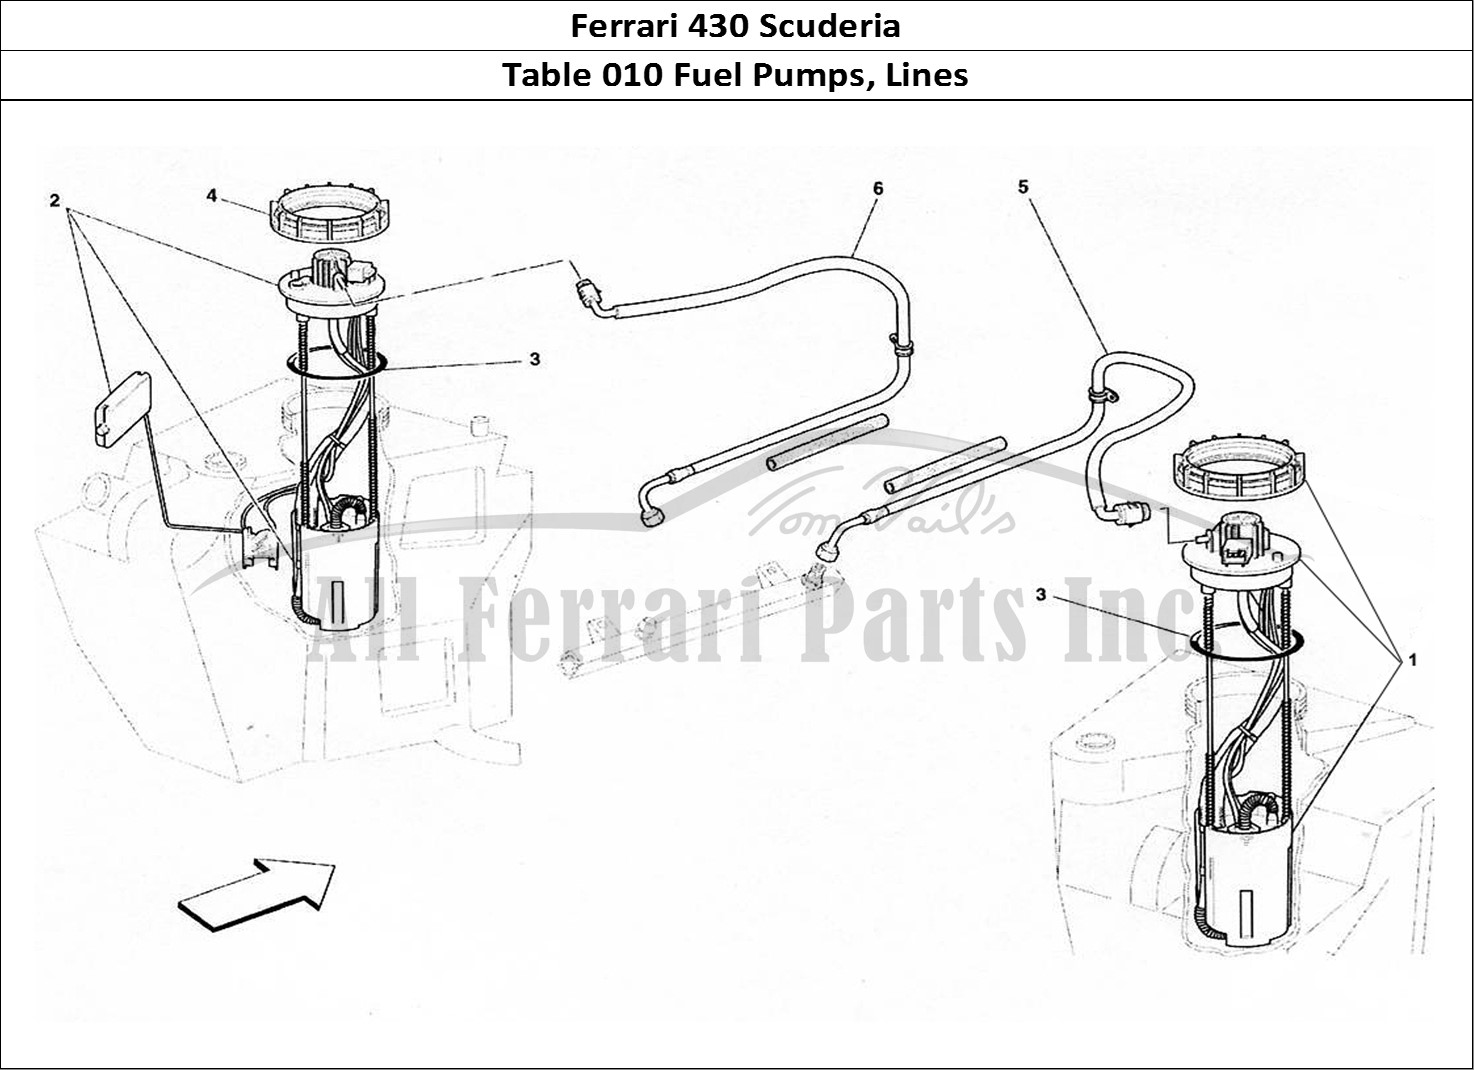 Ferrari Parts Ferrari 430 Scuderia Page 010 Fuel Pumps and Pipes